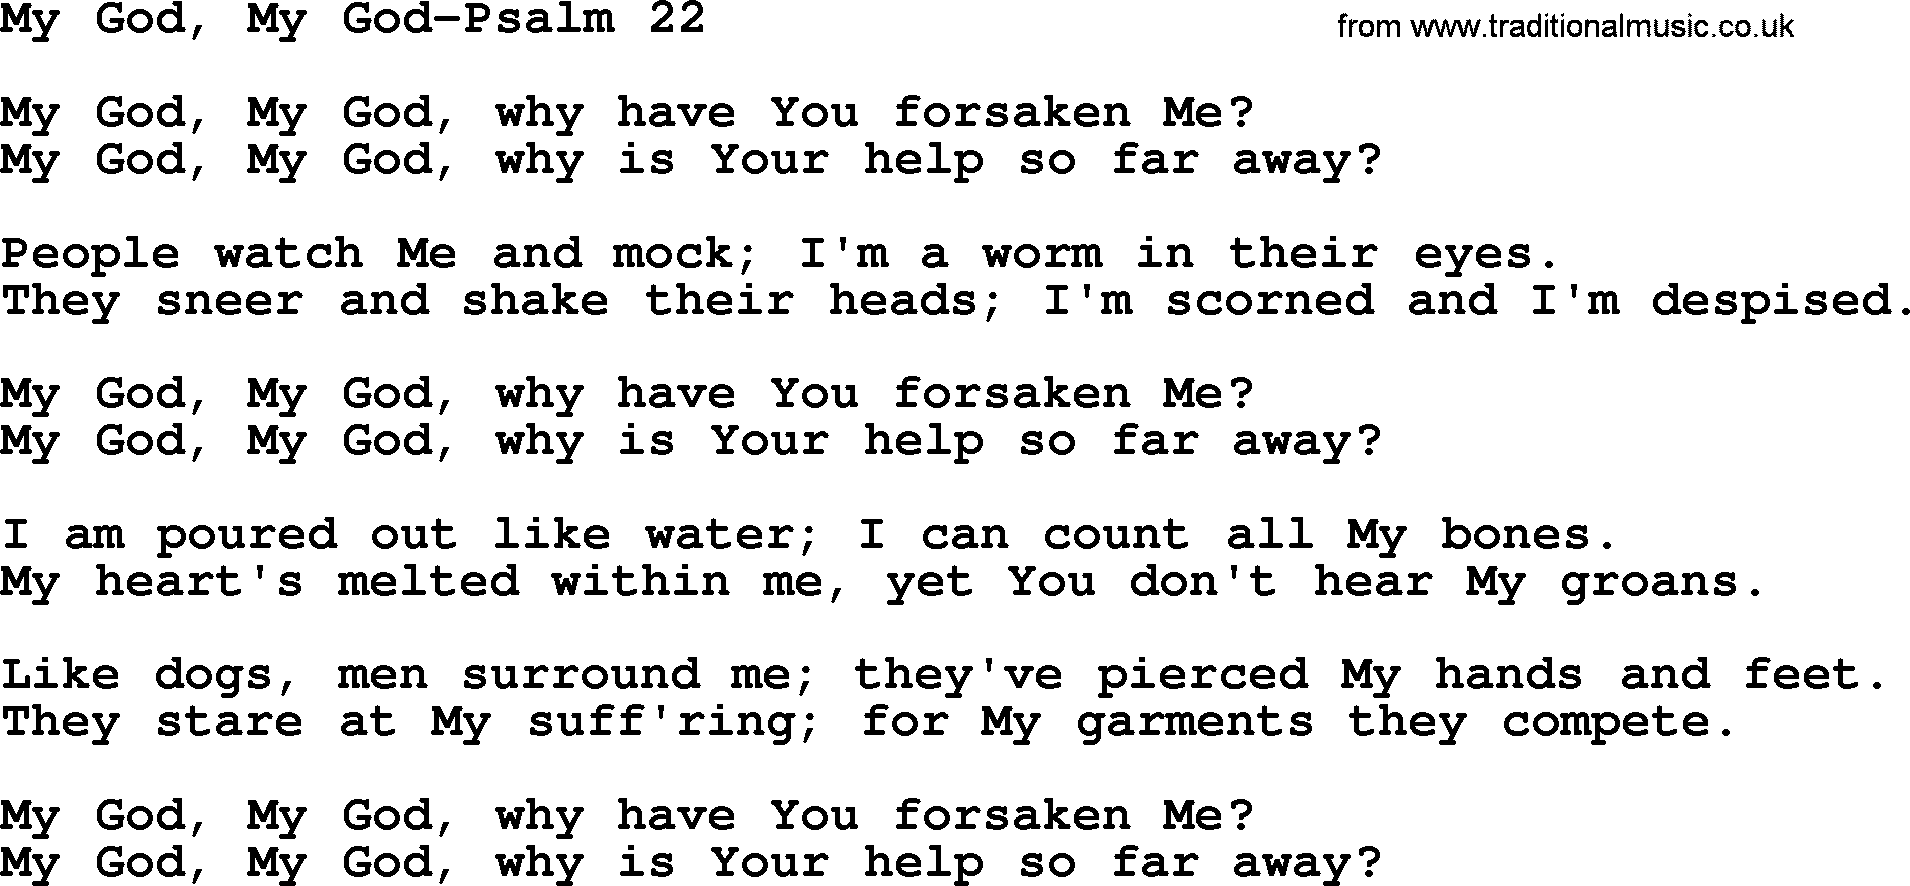 Hymns from the Psalms, Song: My God, My God-Psalm 22 - lyrics with PDF